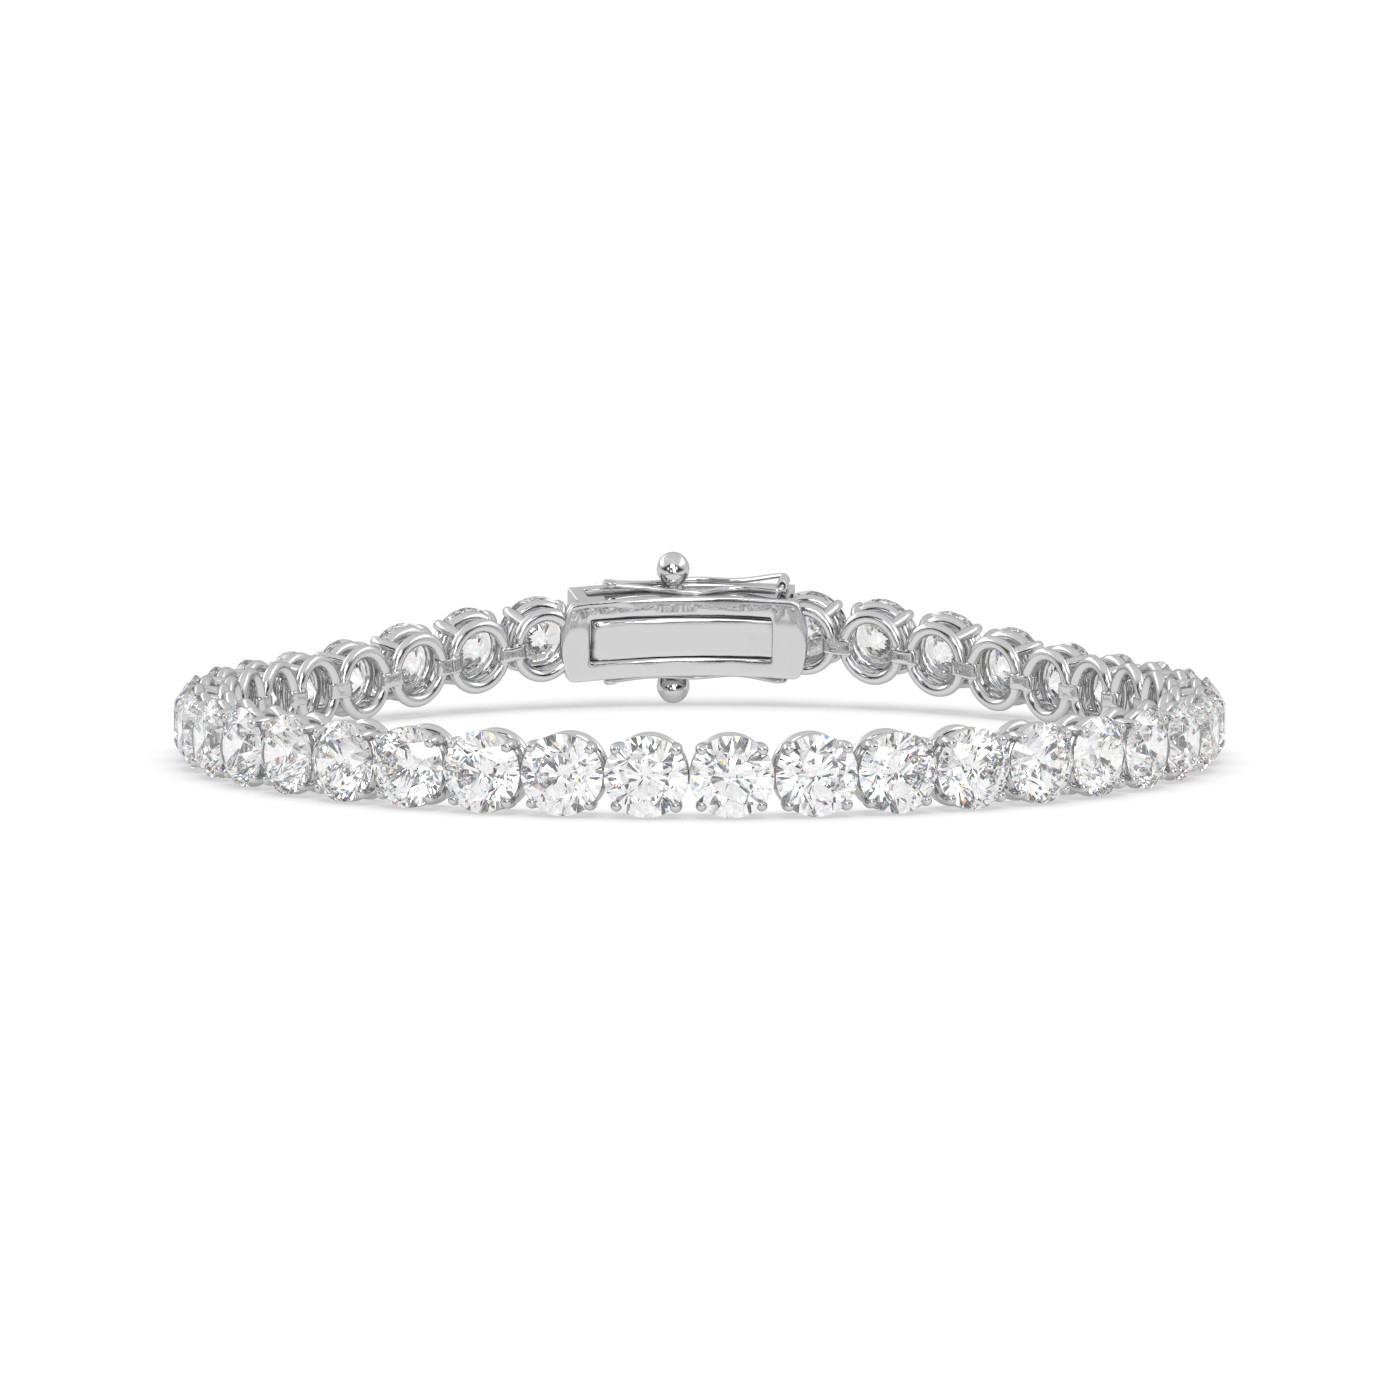 18k white gold 8.0 carat round diamond tennis bracelet with traditional lock sytem Photos & images